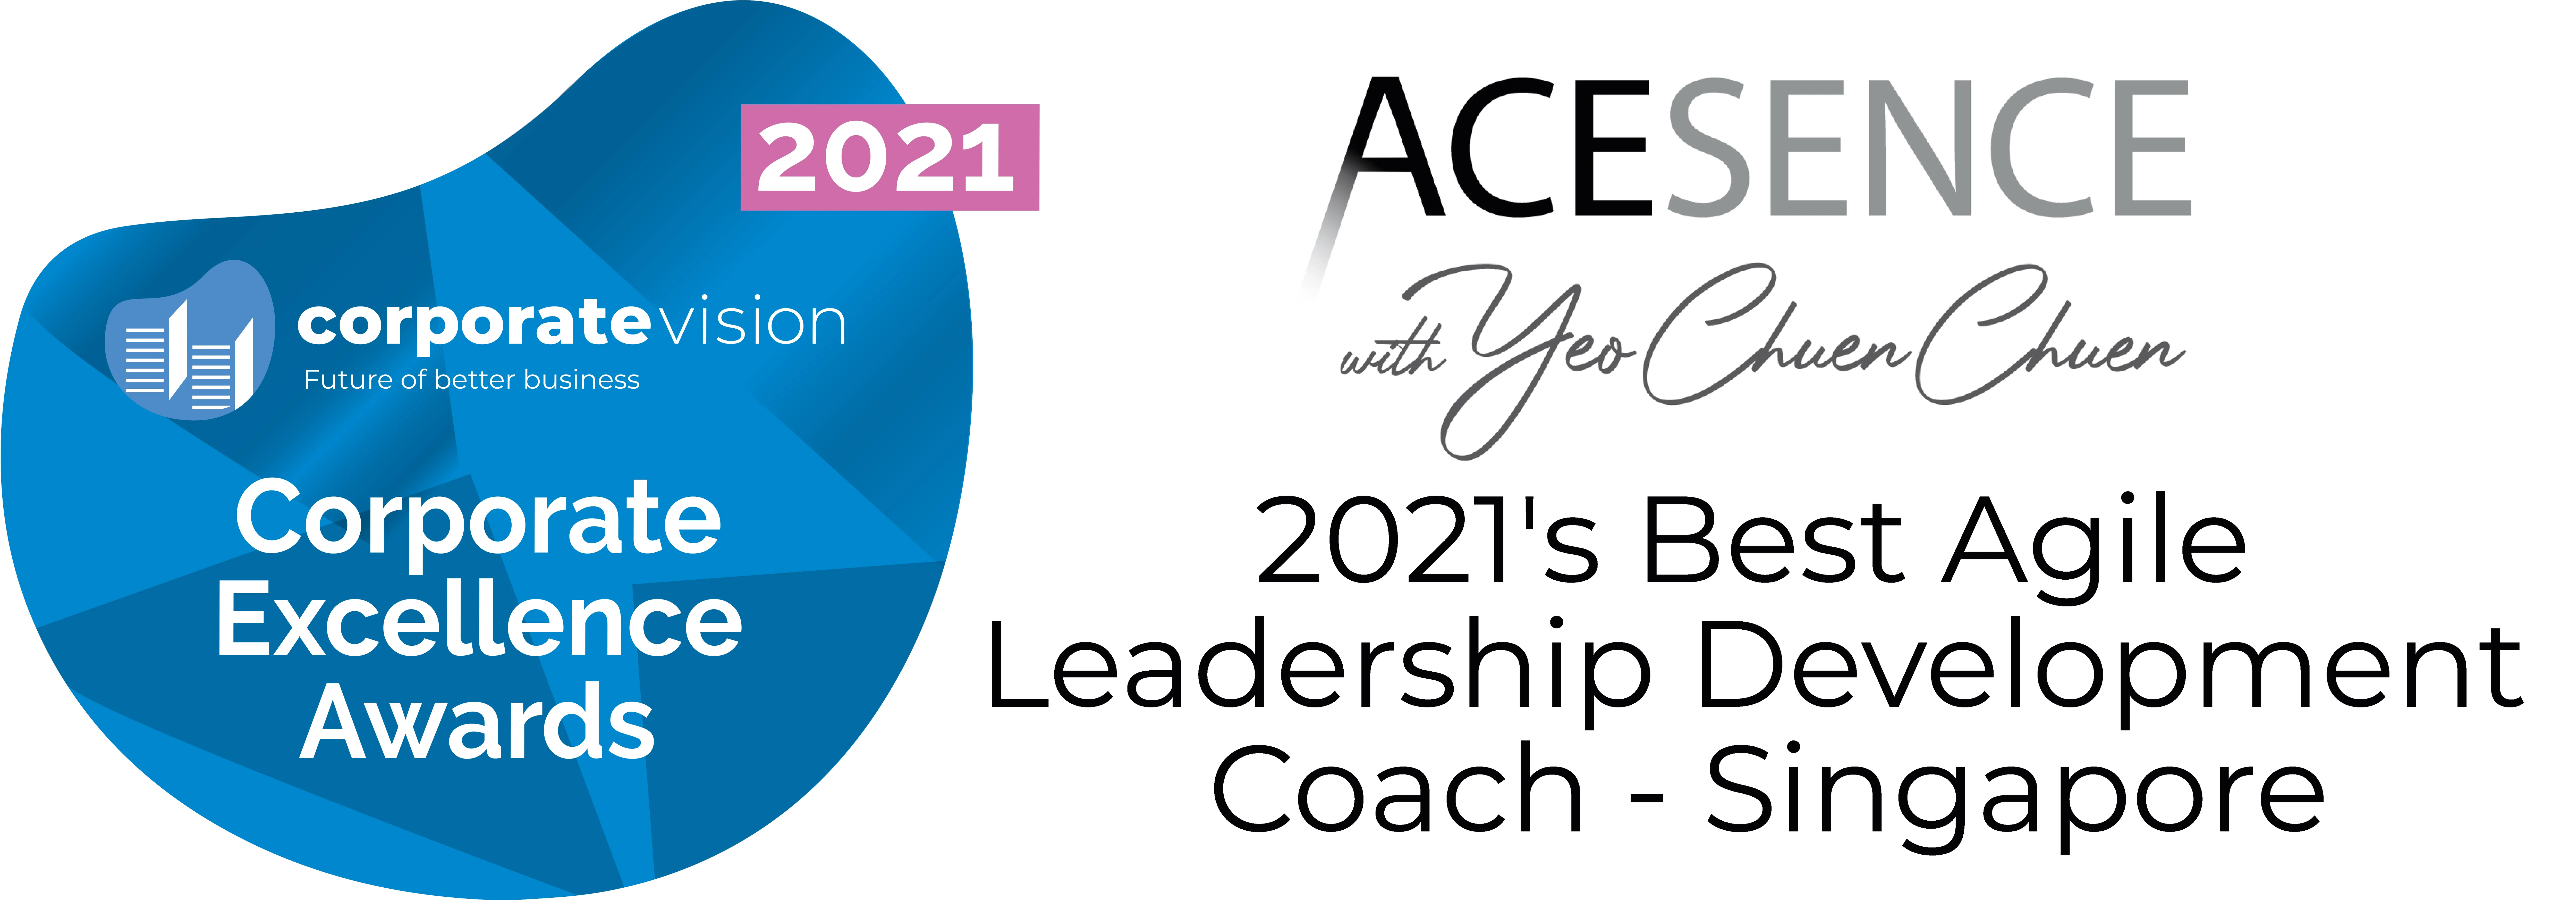 best agile leadership coach 2021